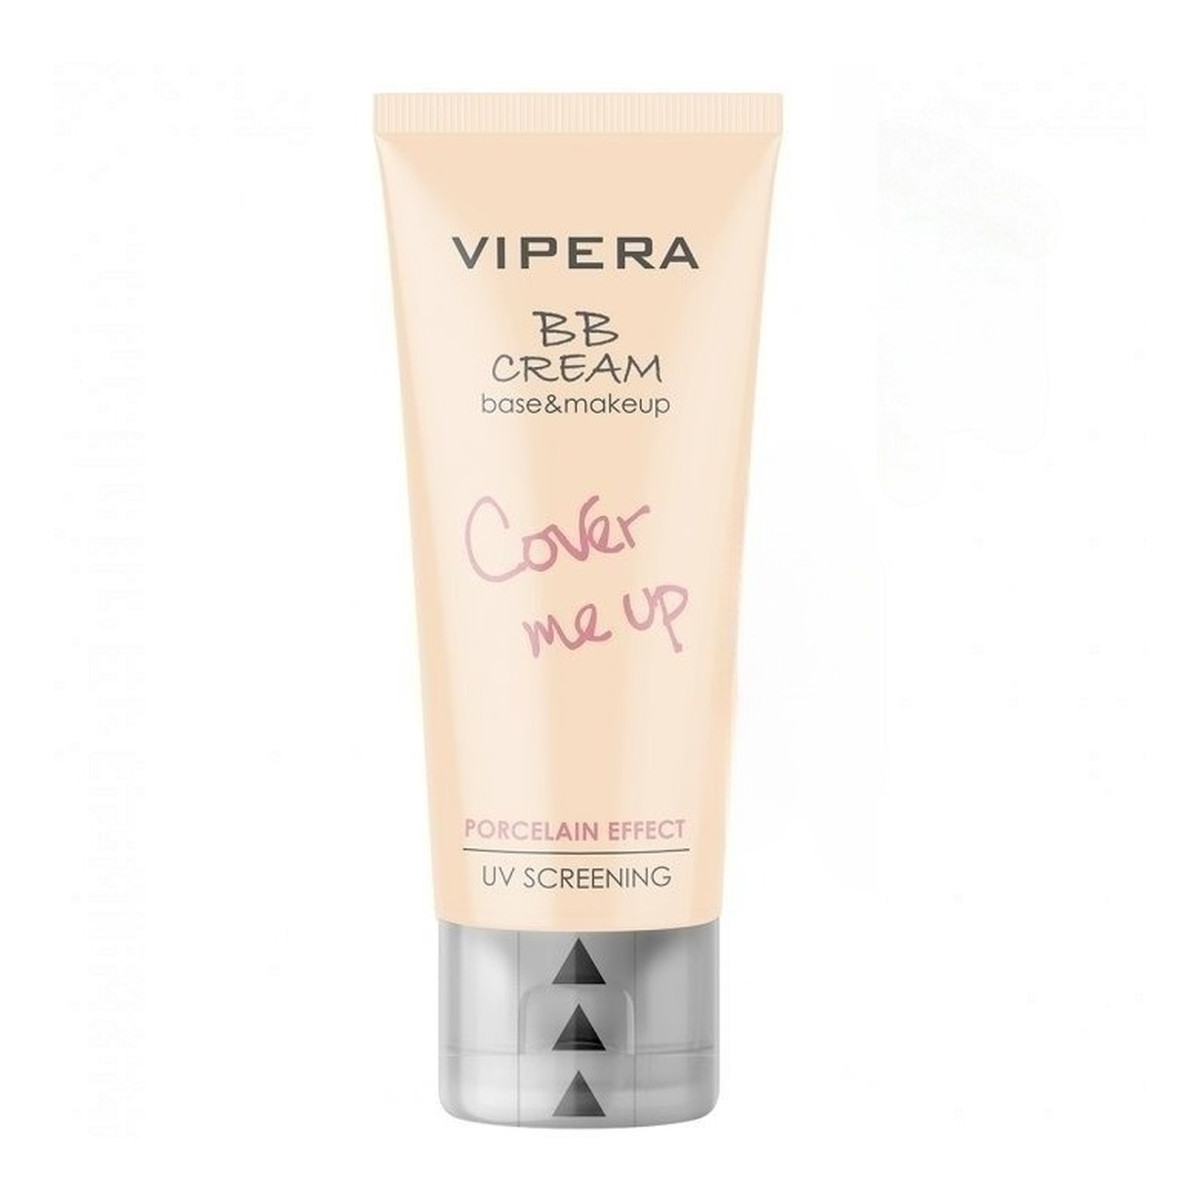 Vipera BB Cream Cover Me Up kryjący Krem bb z filtrem uv 01 ecru 35ml